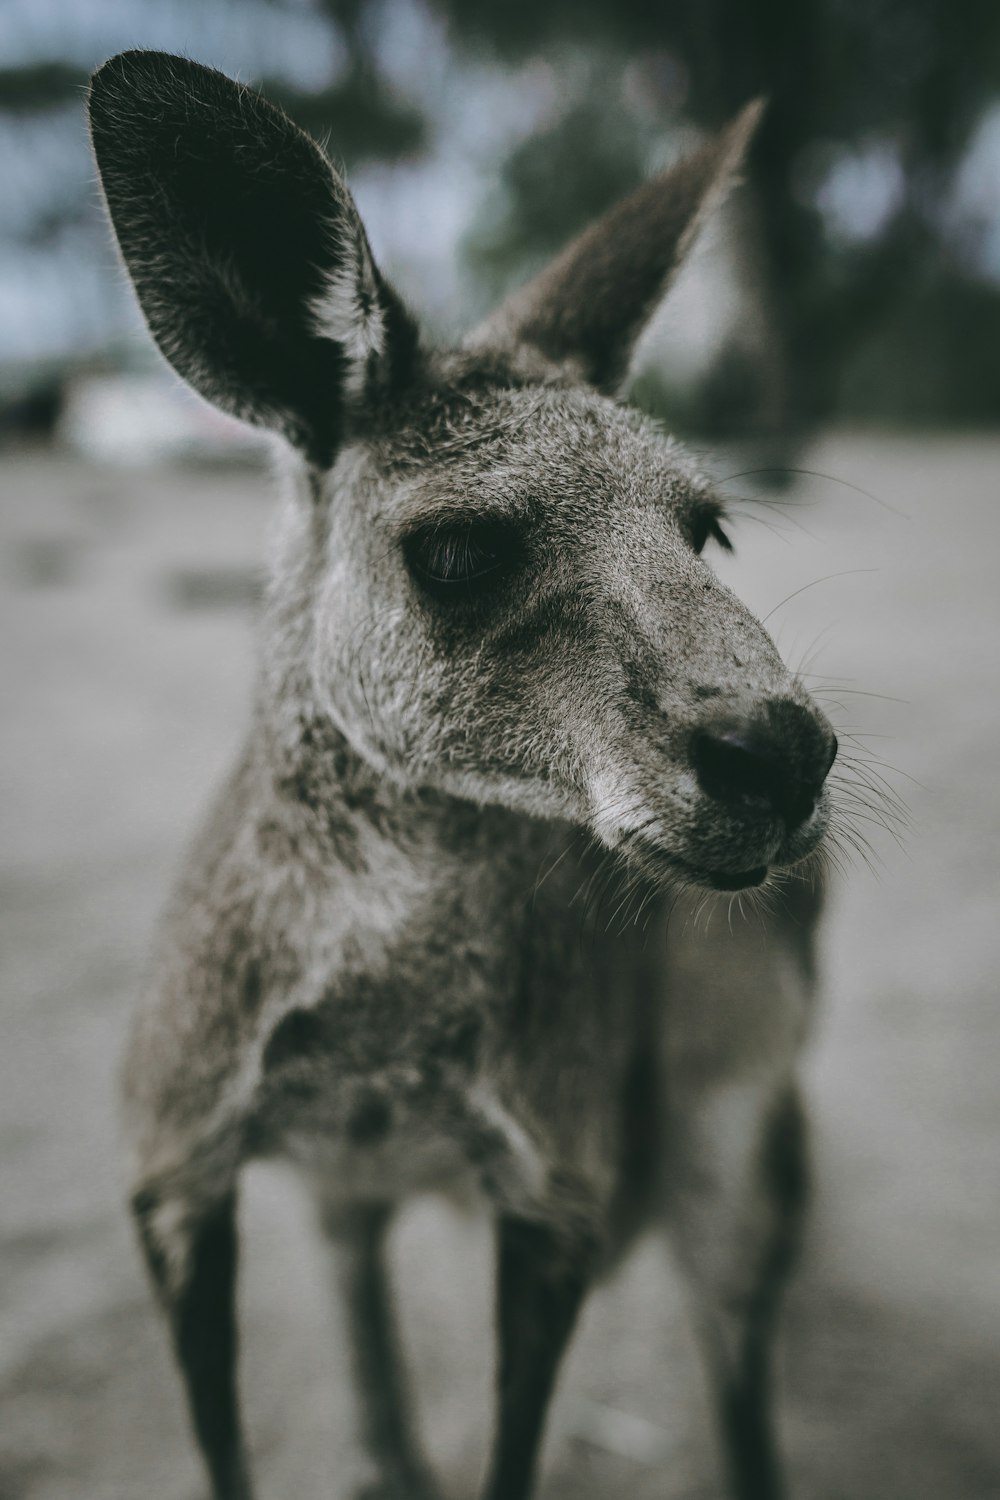 a close up of a kangaroo on a dirt ground